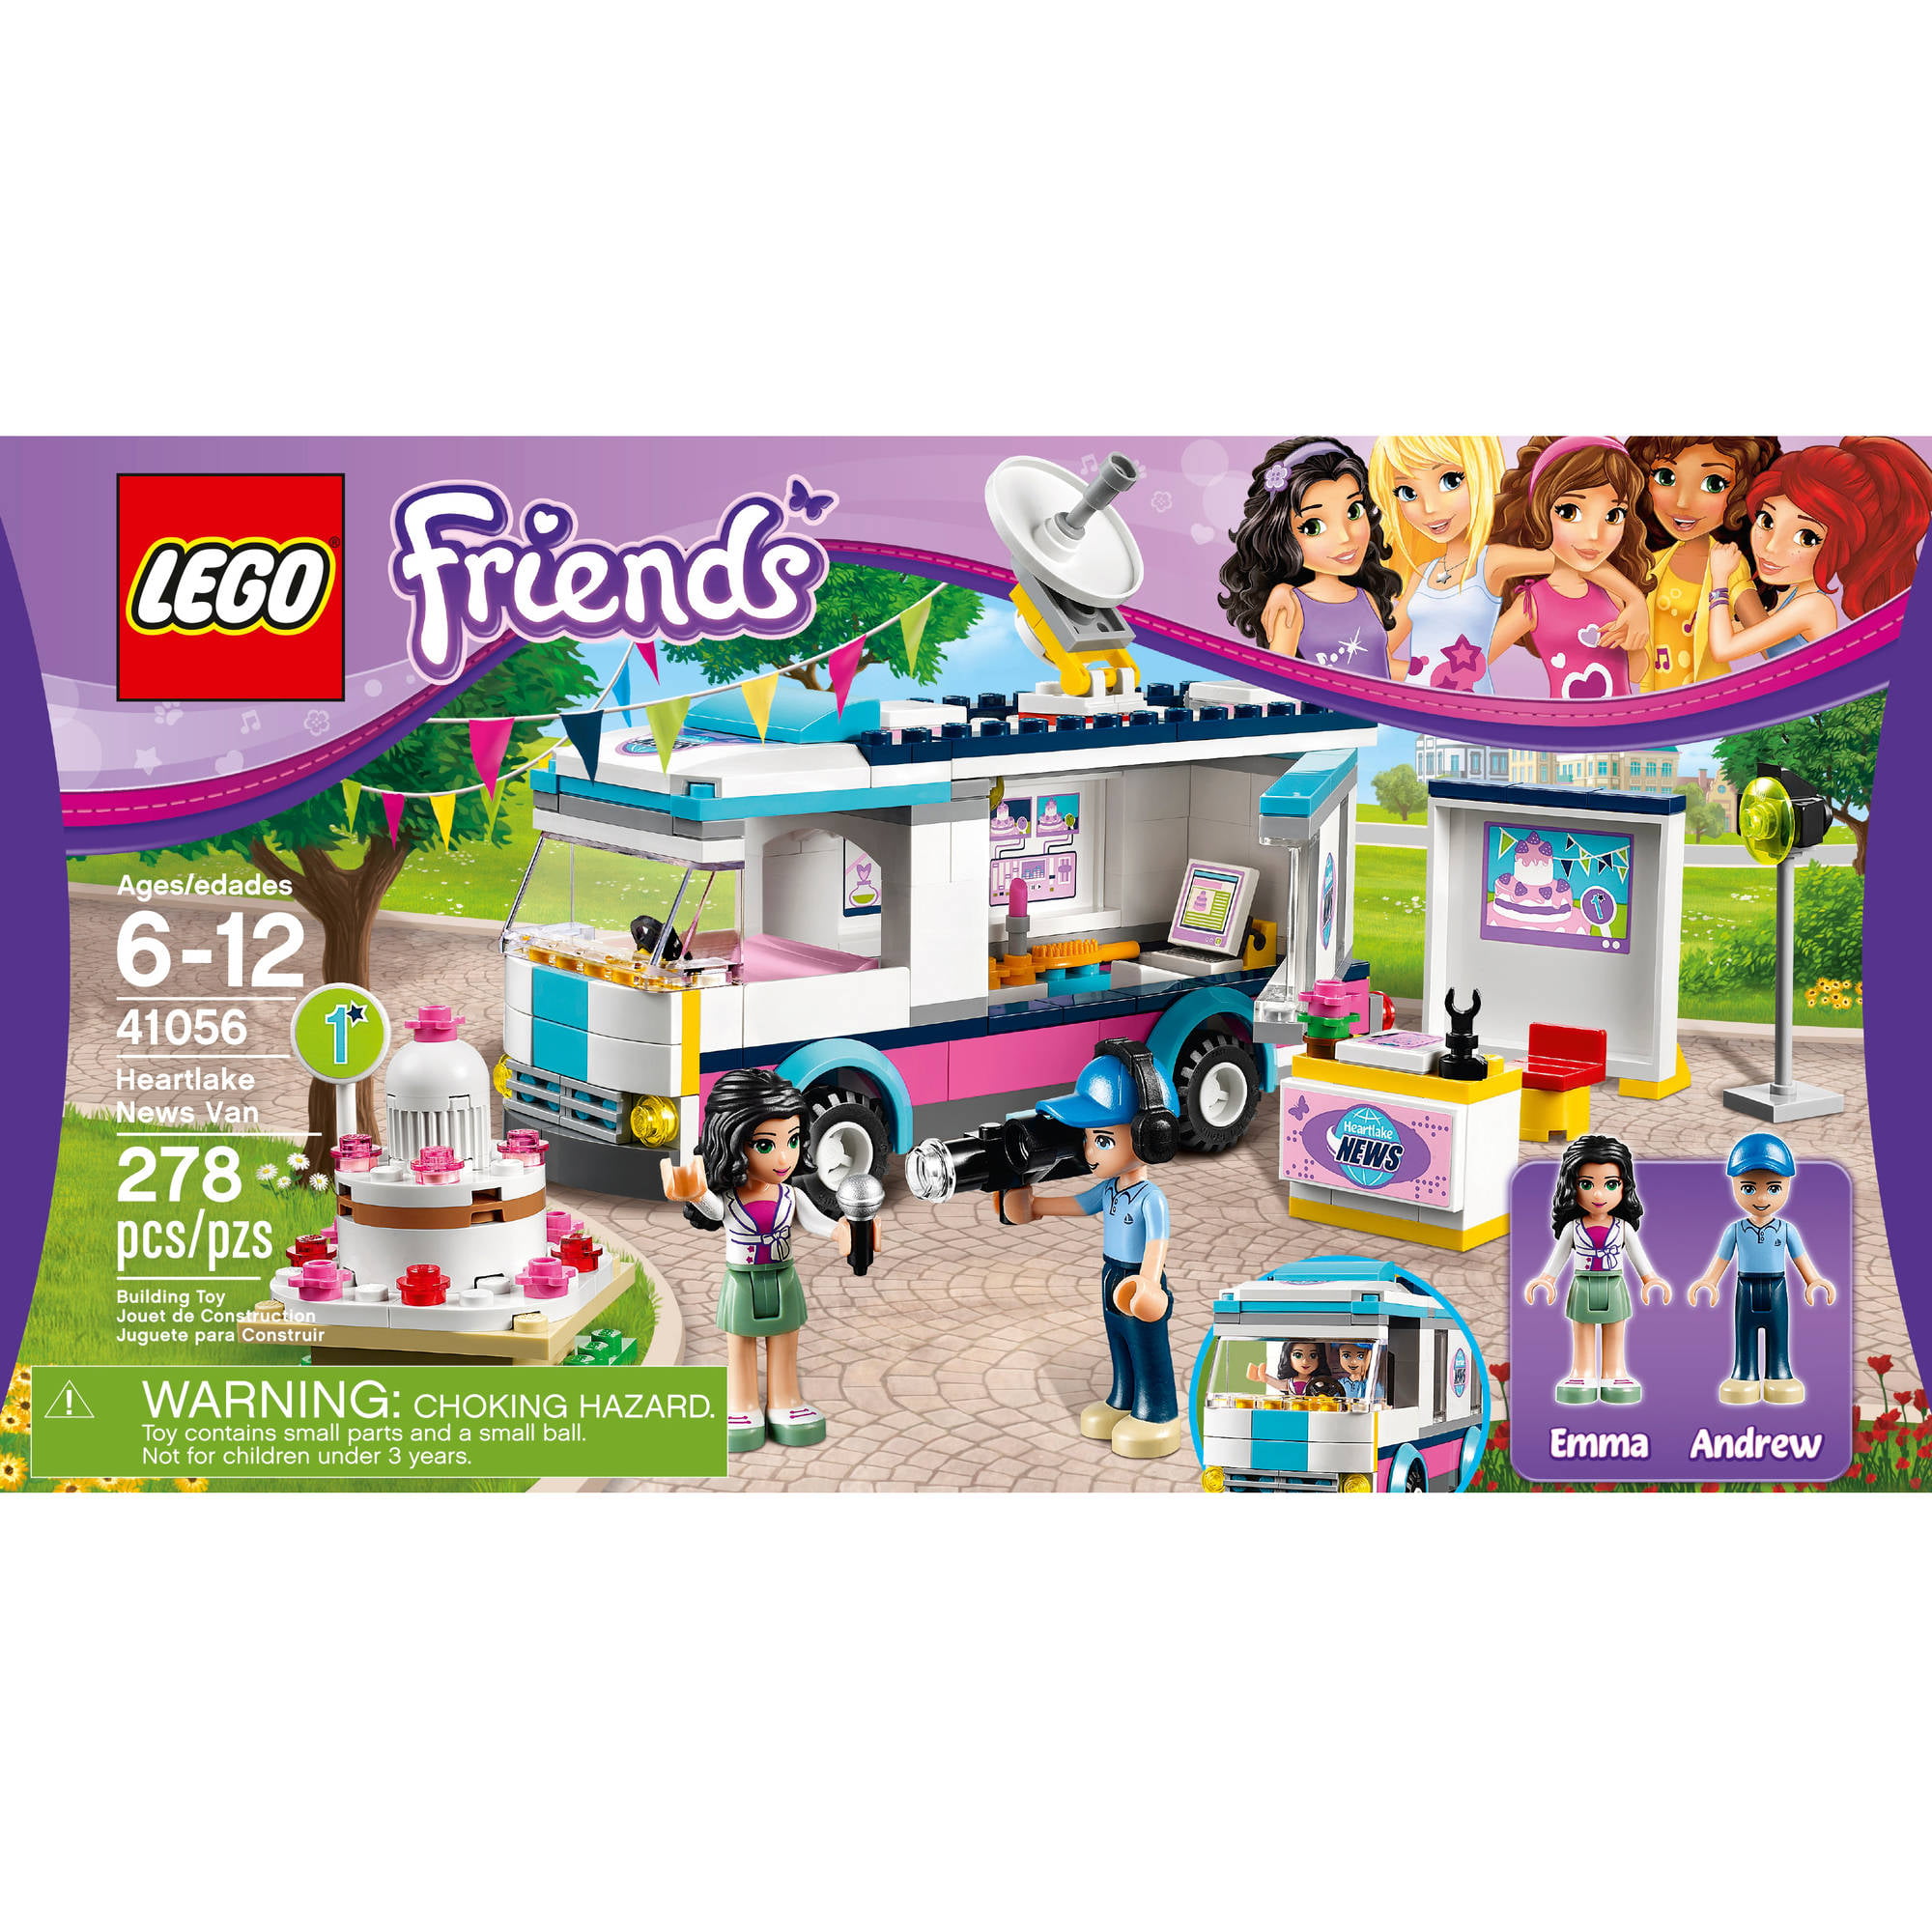 girl lego friends sets